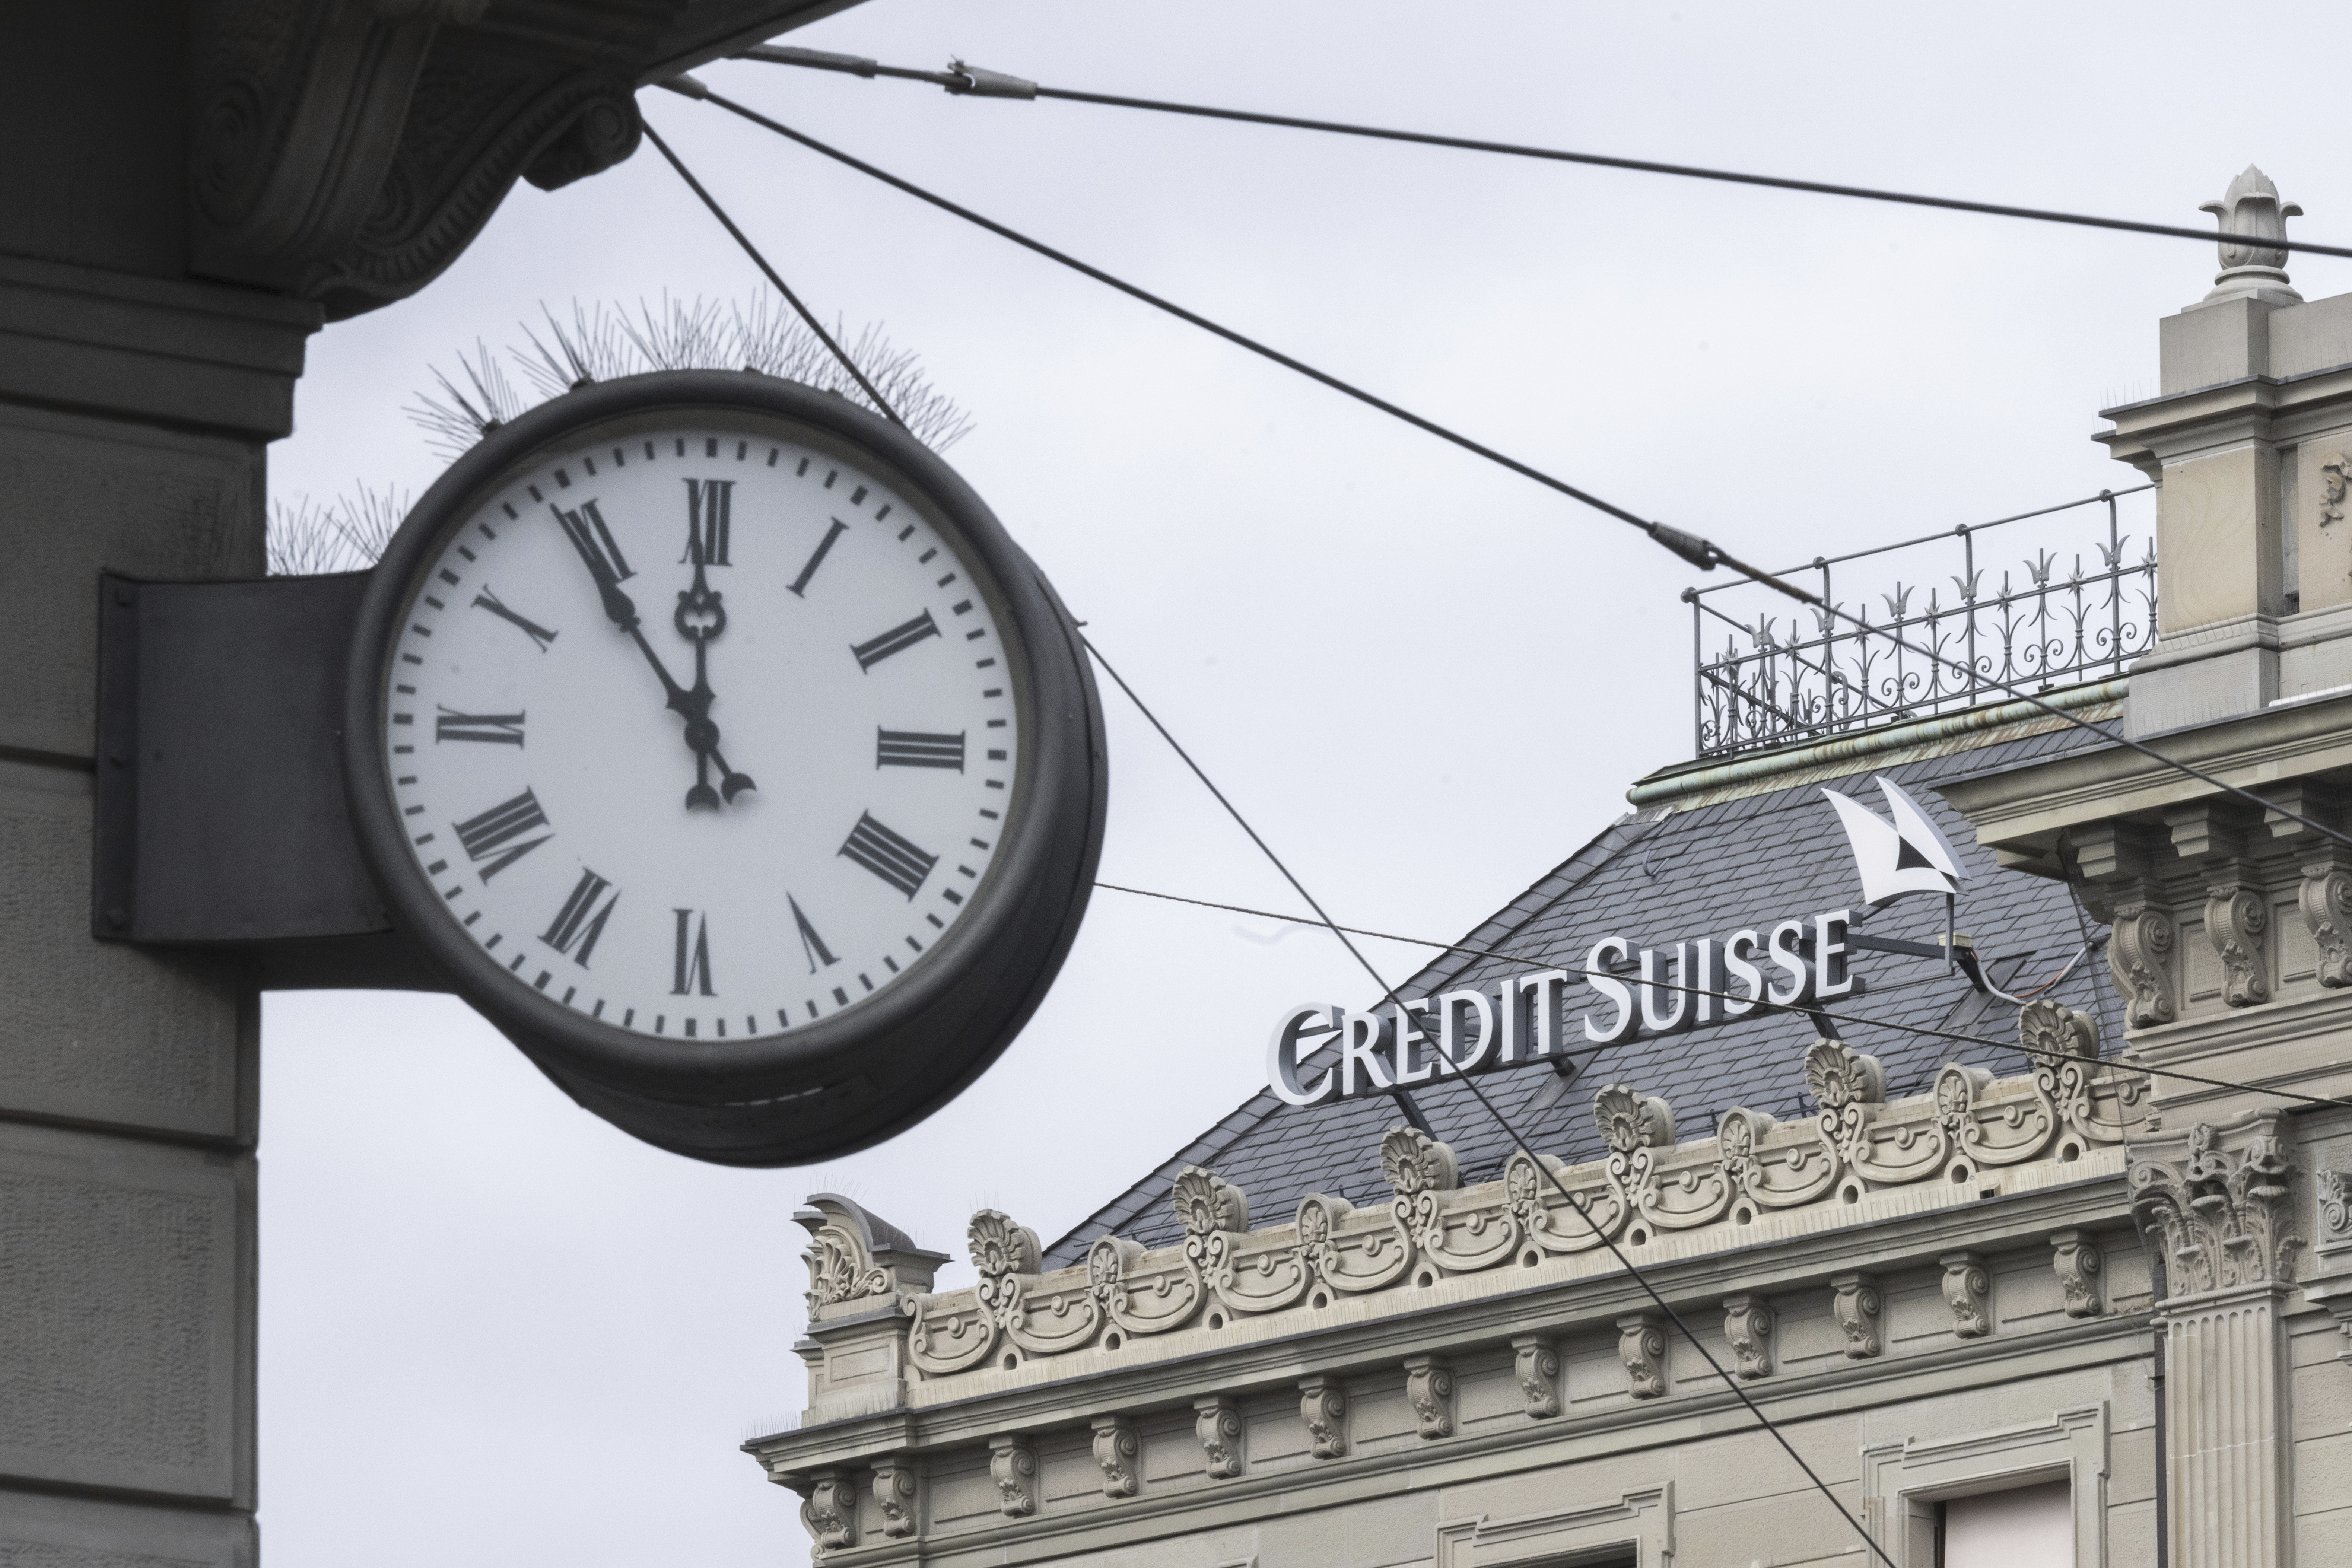 La compra forzada del Credit Suisse